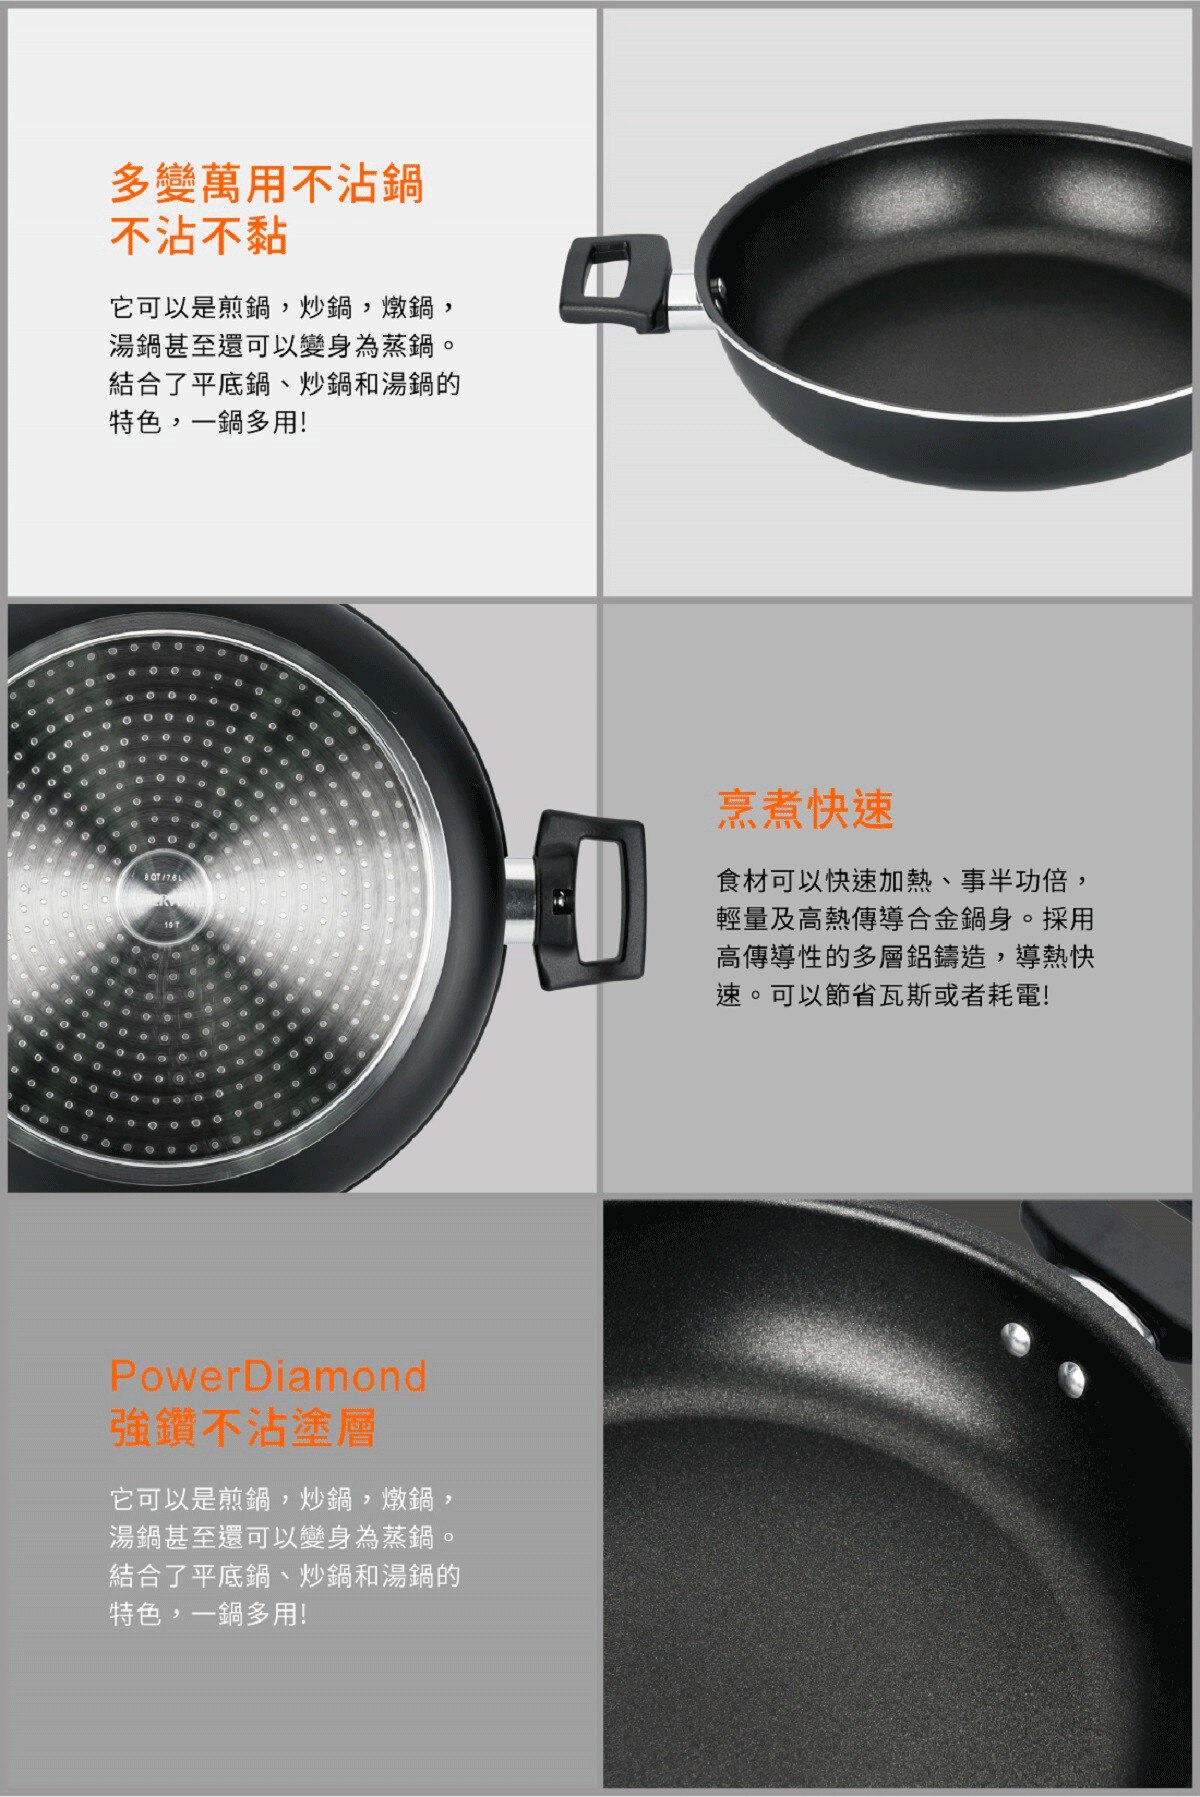 Farberware 30cm多功能不沾萬用鍋三鍋組，煎鍋+湯鍋+蒸籠一應具全，強鑽層三層不沾塗層設計，適用各式爐具。